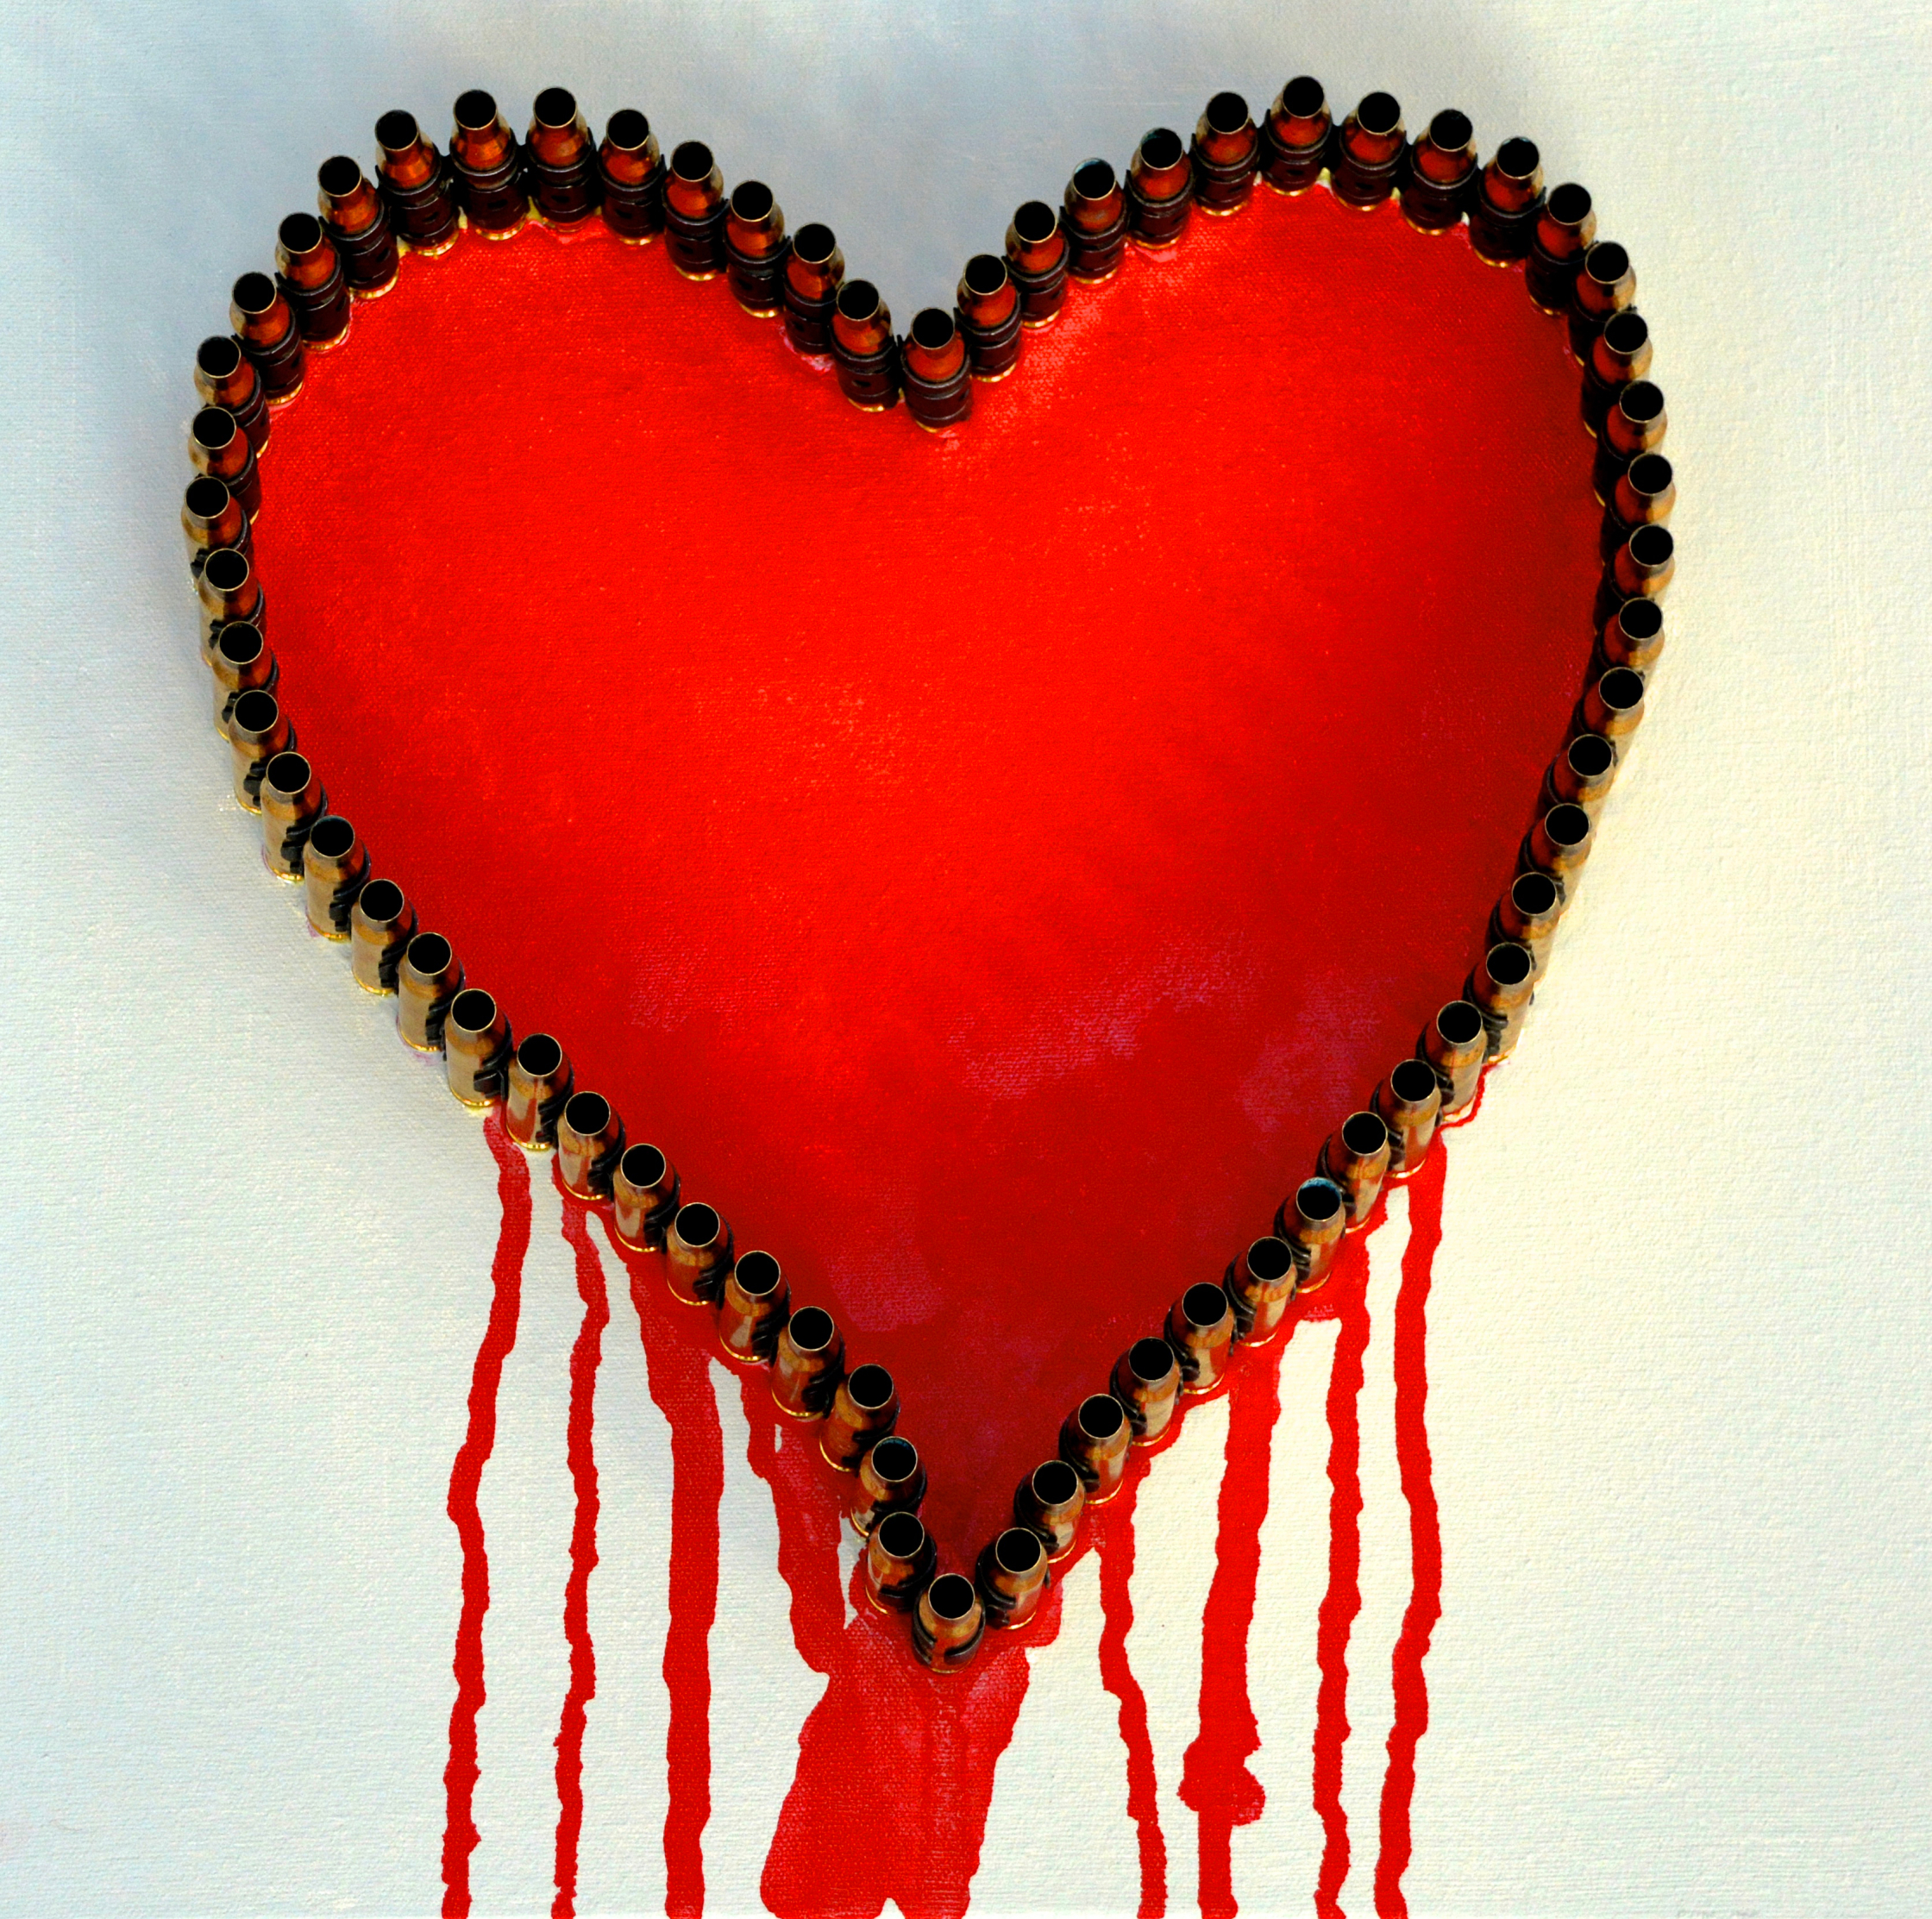 Bleeding heart1.jpg